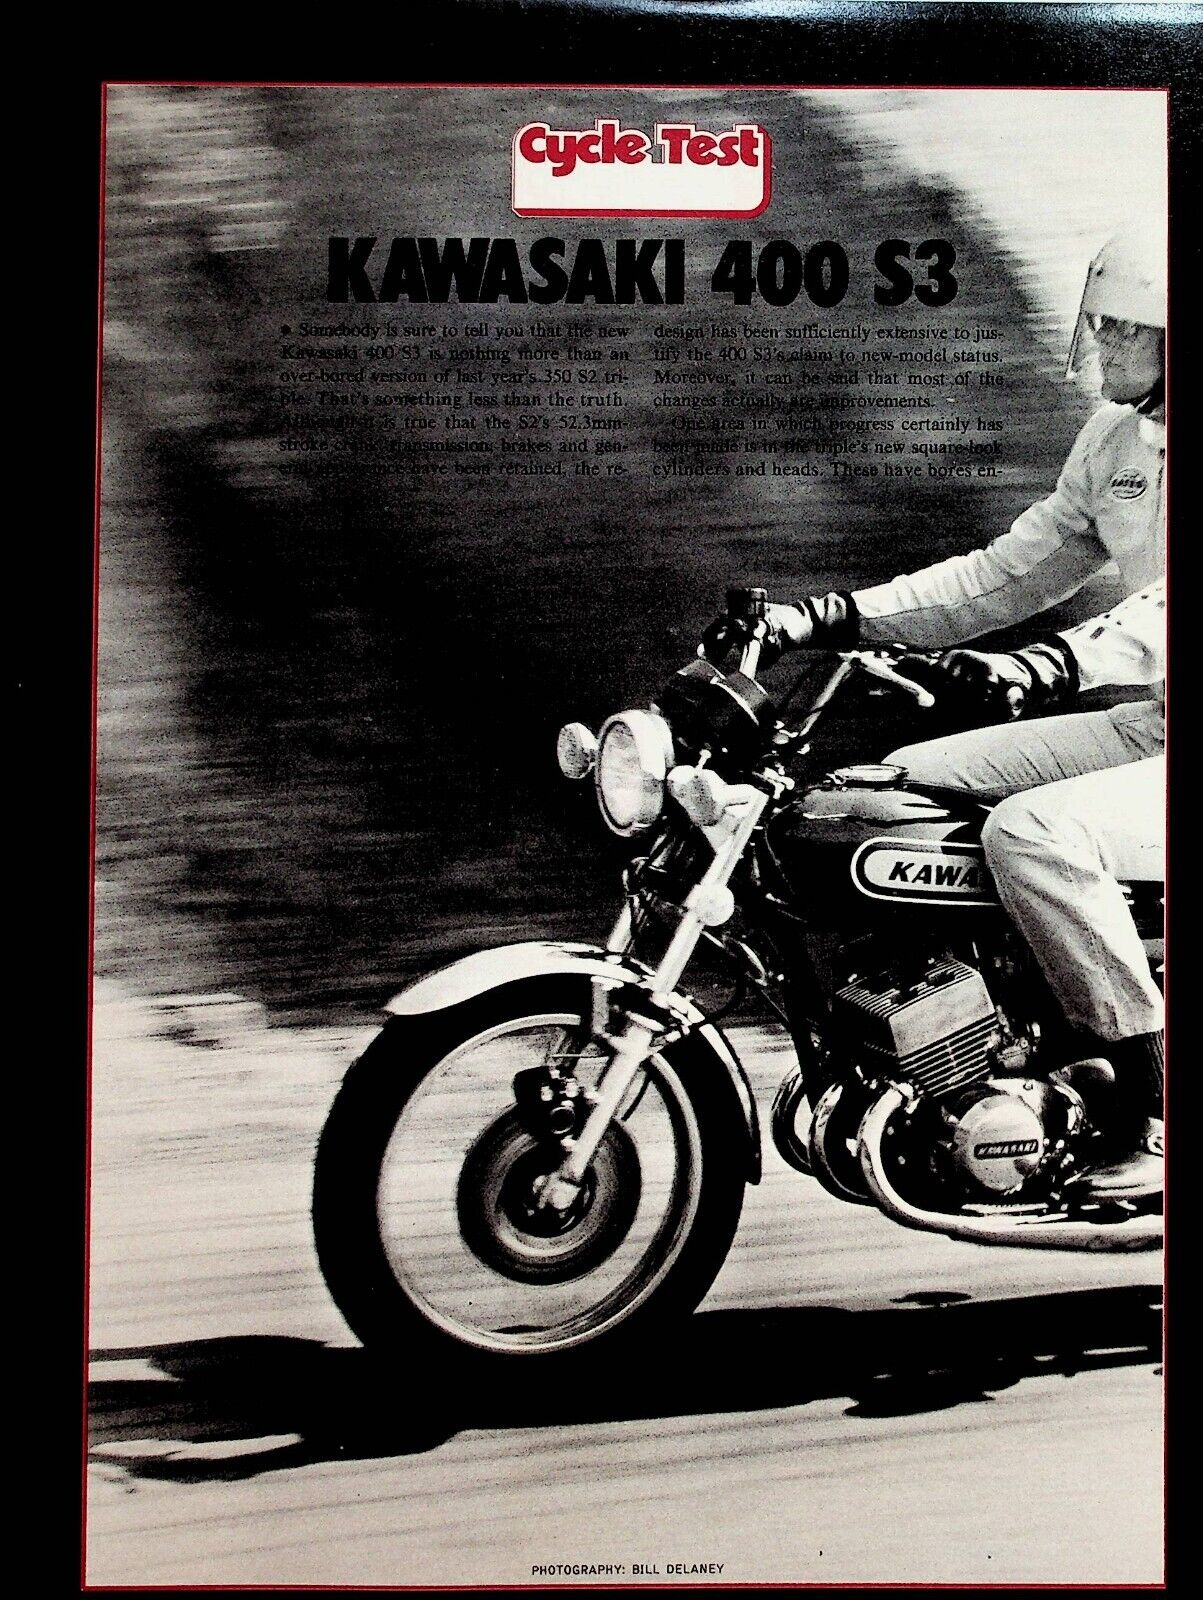 1974 Kawasaki 400 S3 - 5-Page Vintage Motorcycle Road Test Article